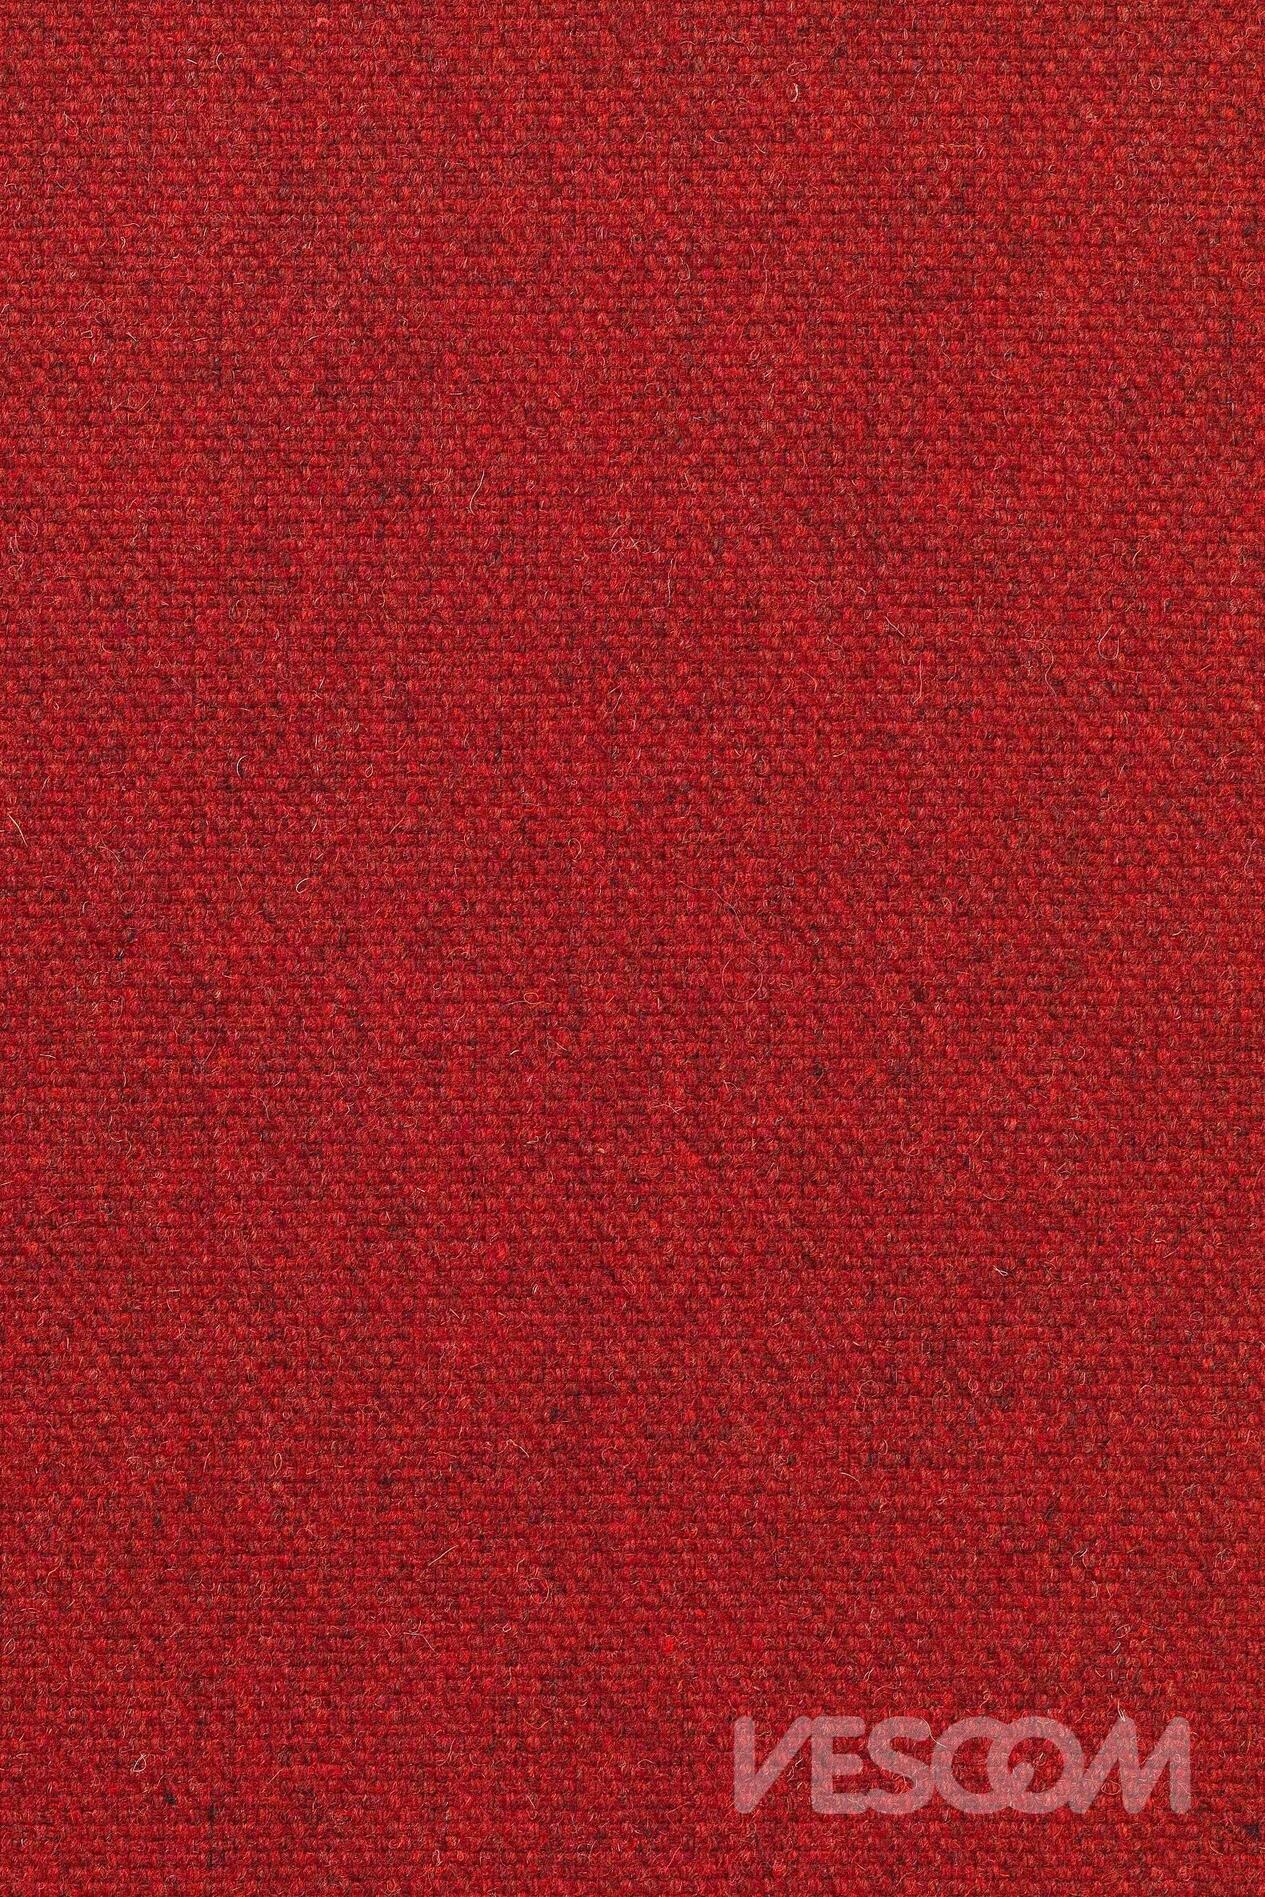 Vescom-Wolin-Upholstery-Fabric-7050.35.jpg